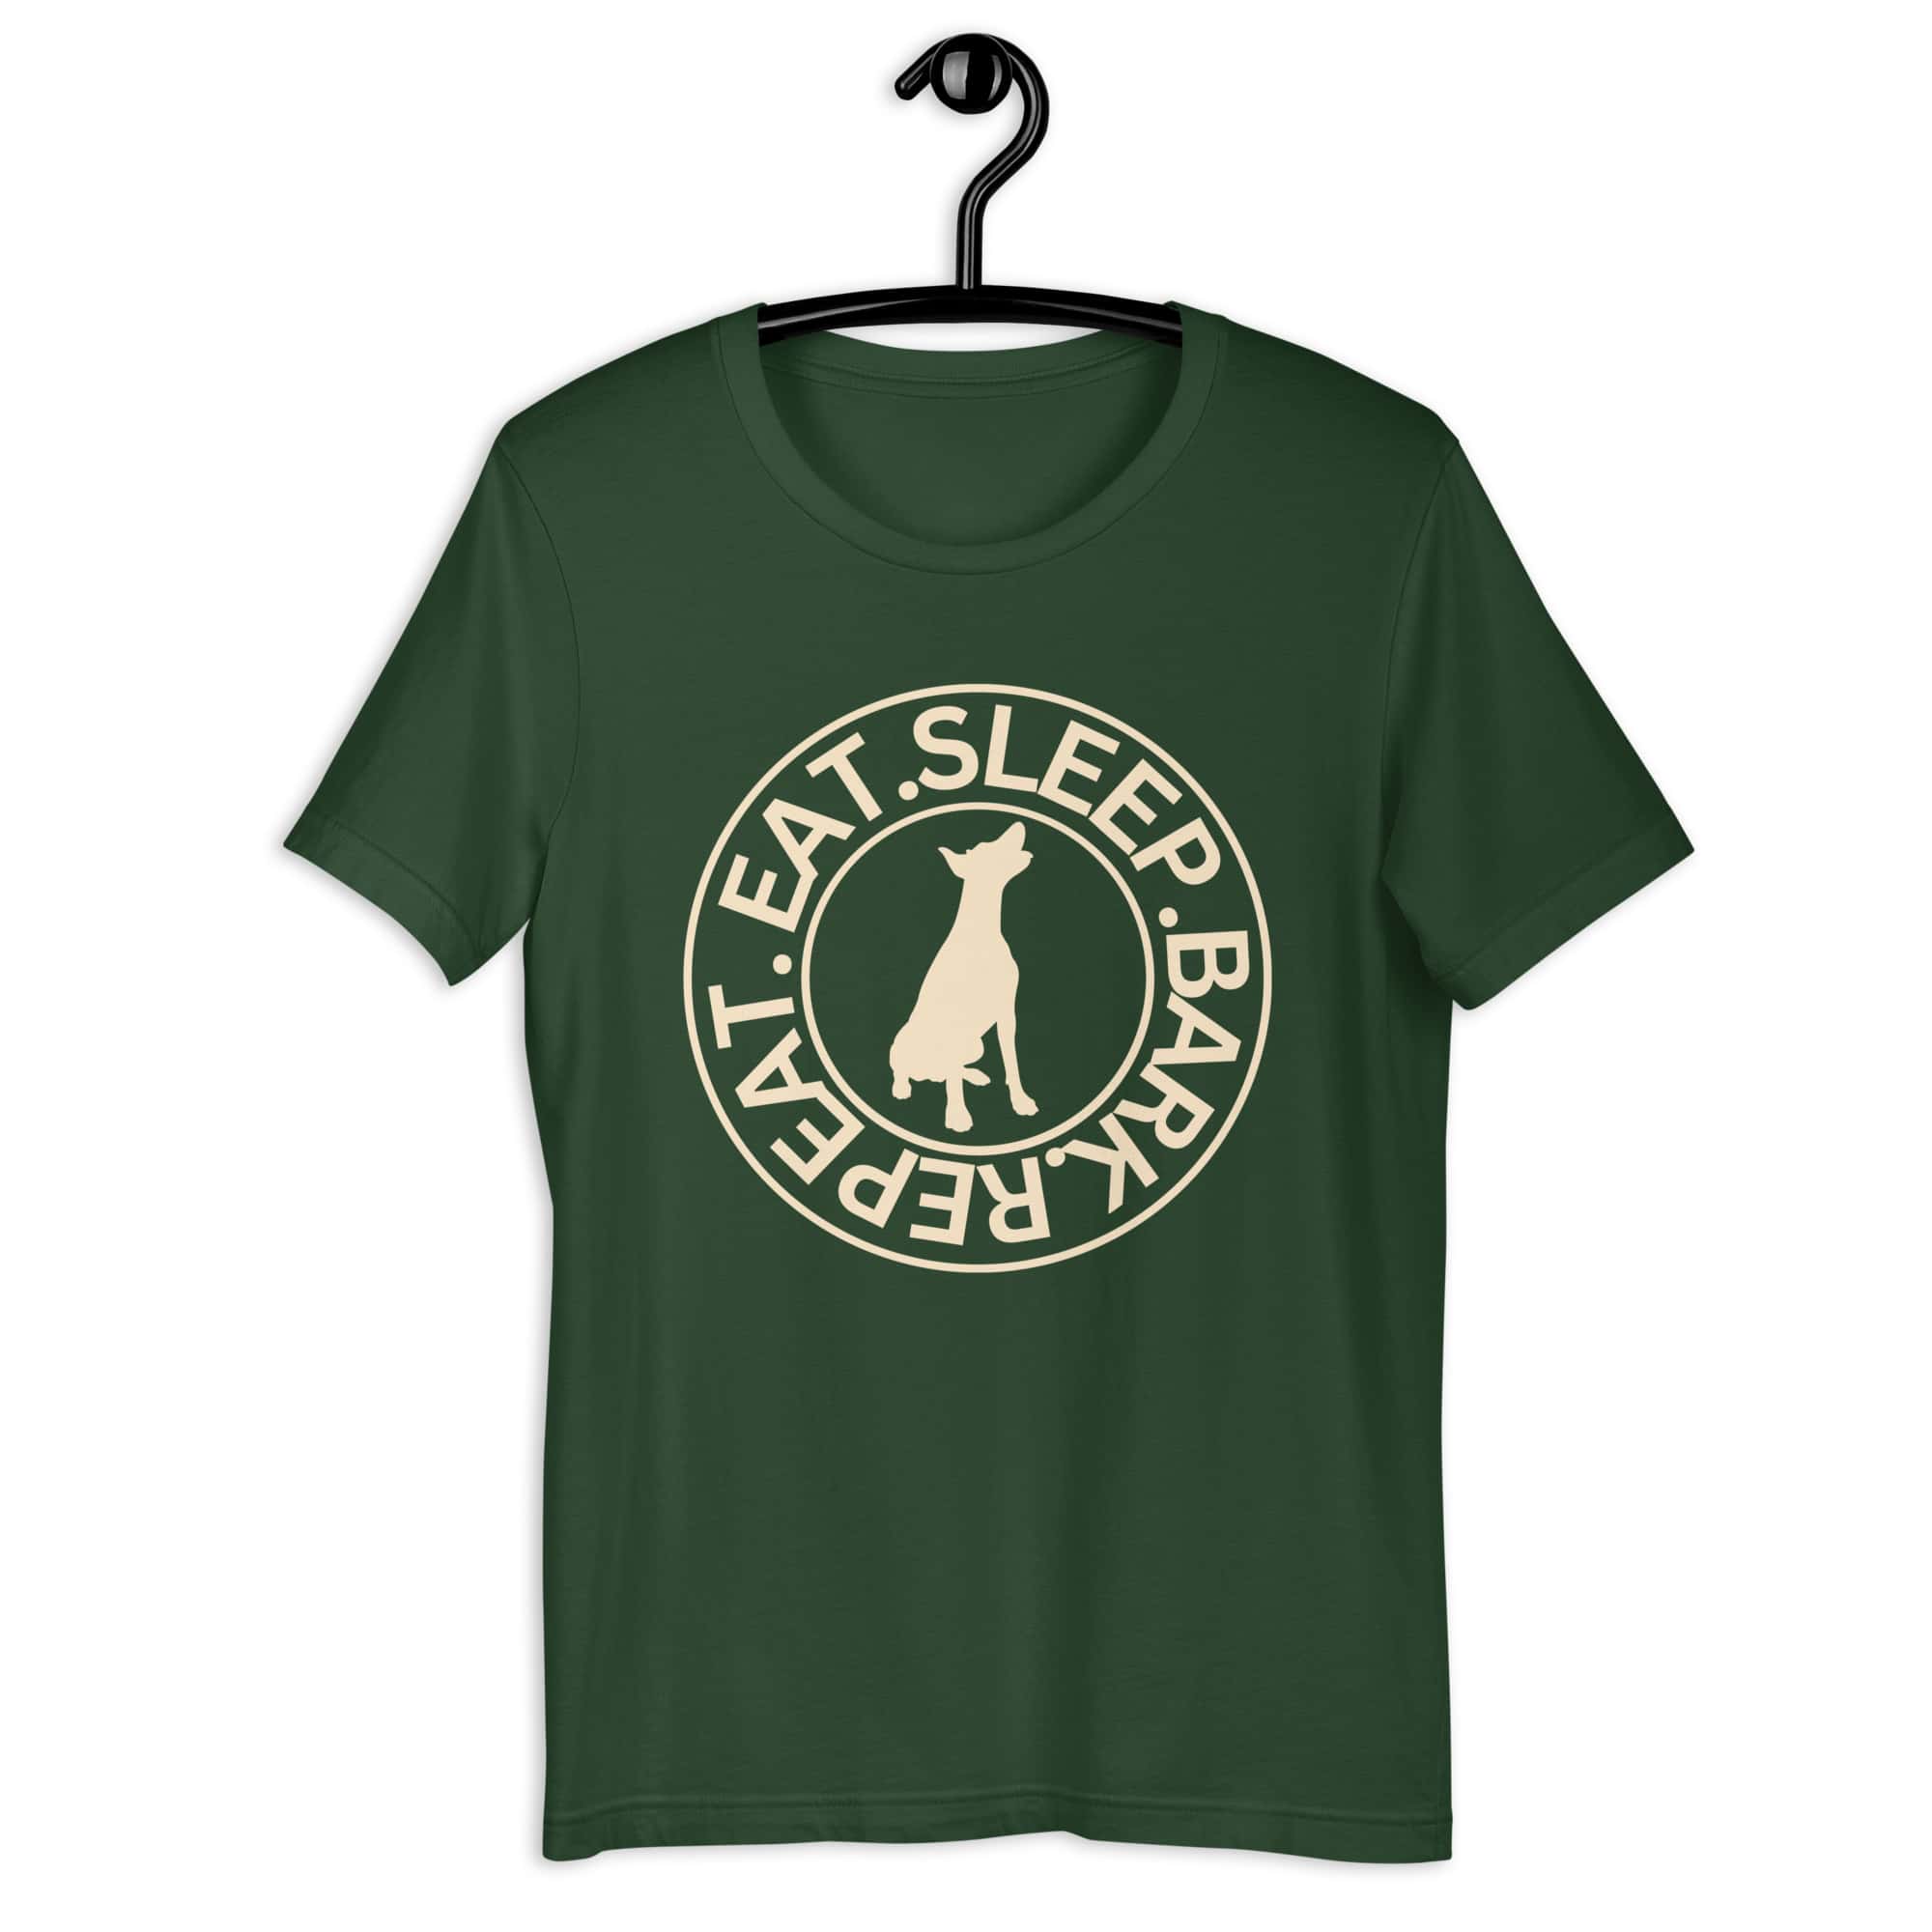 Eat Sleep Bark Repeat Terrier Unisex T-Shirt. Forest